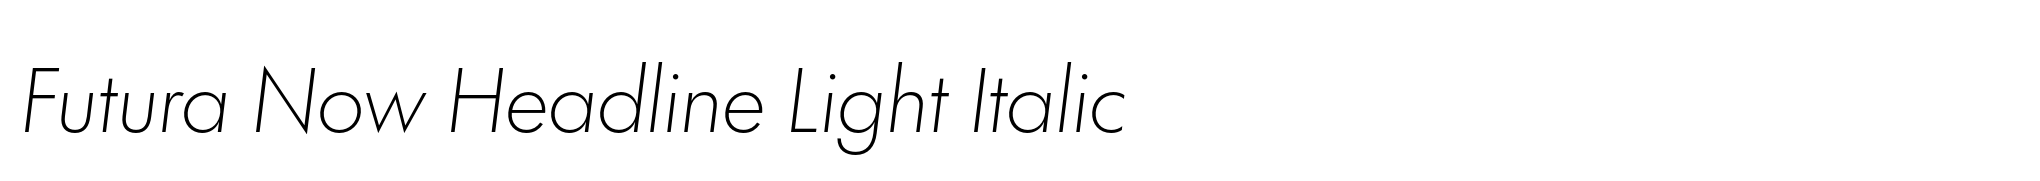 Futura Now Headline Light Italic image